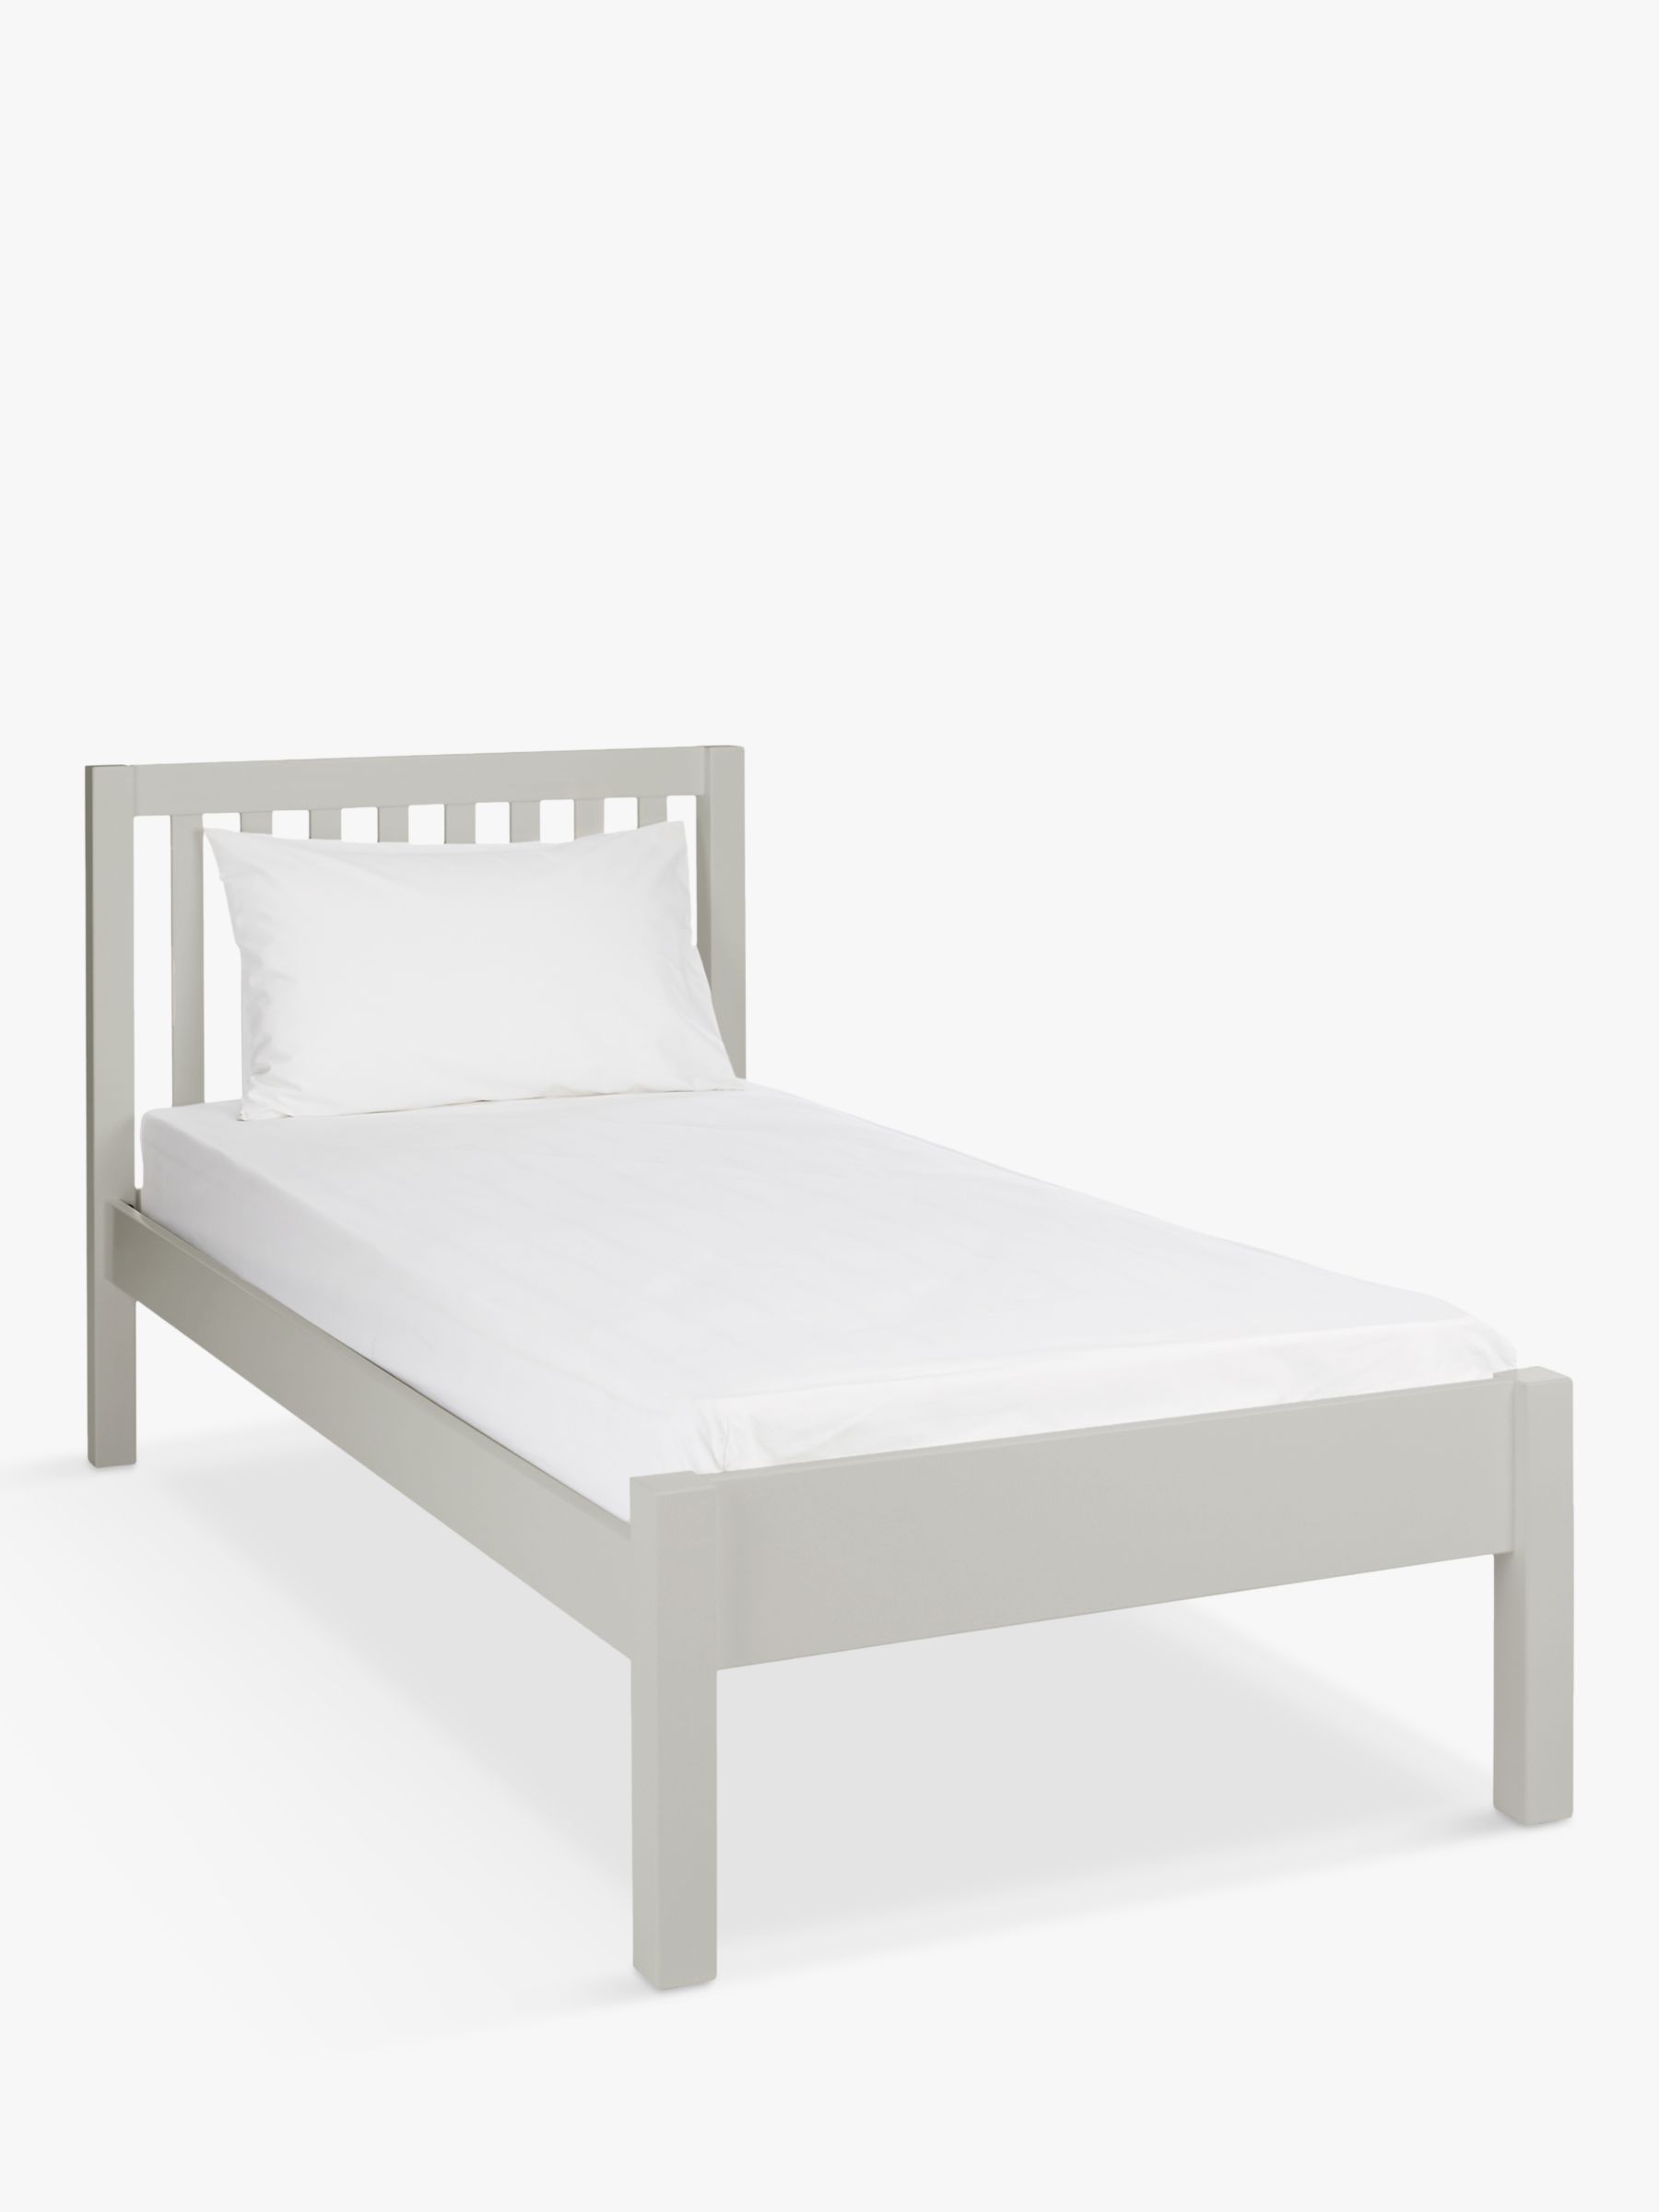 cheap white single bed frame